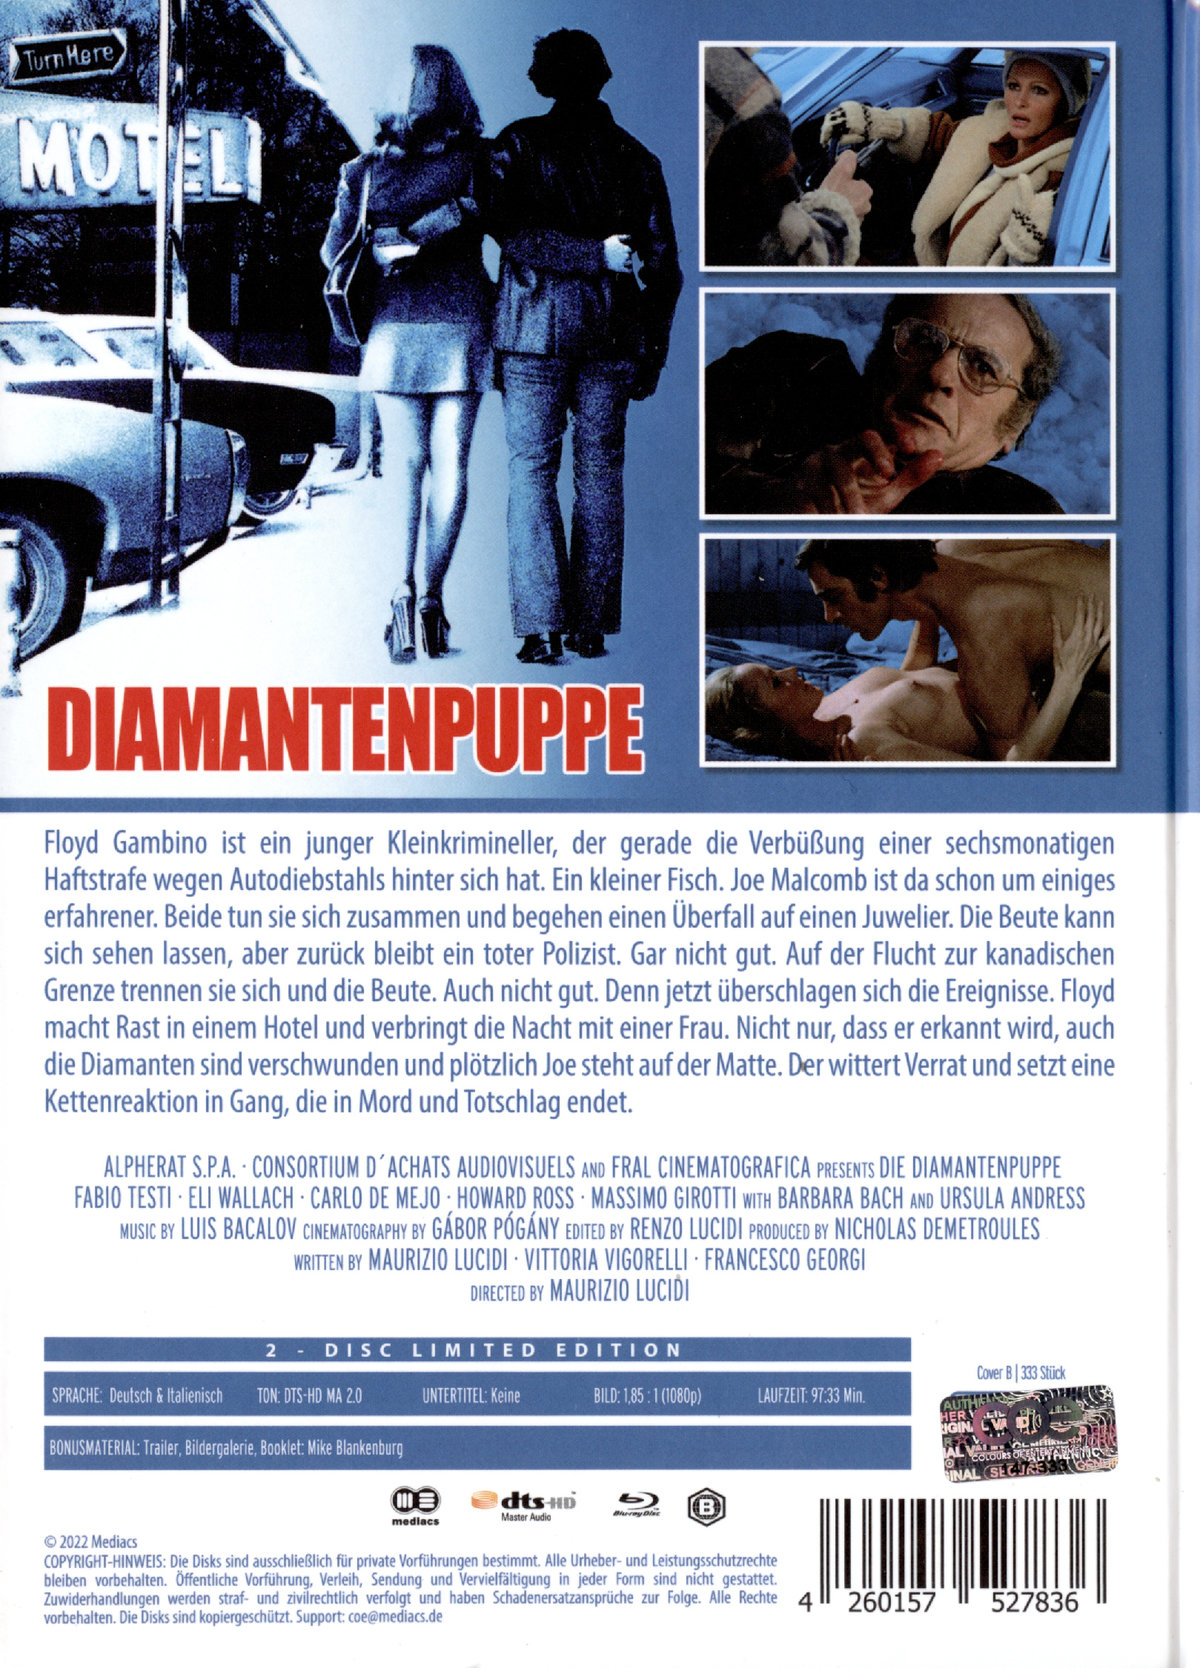 Diamantenpuppe - Uncut Mediabook Edition (DVD+blu-ray) (B)